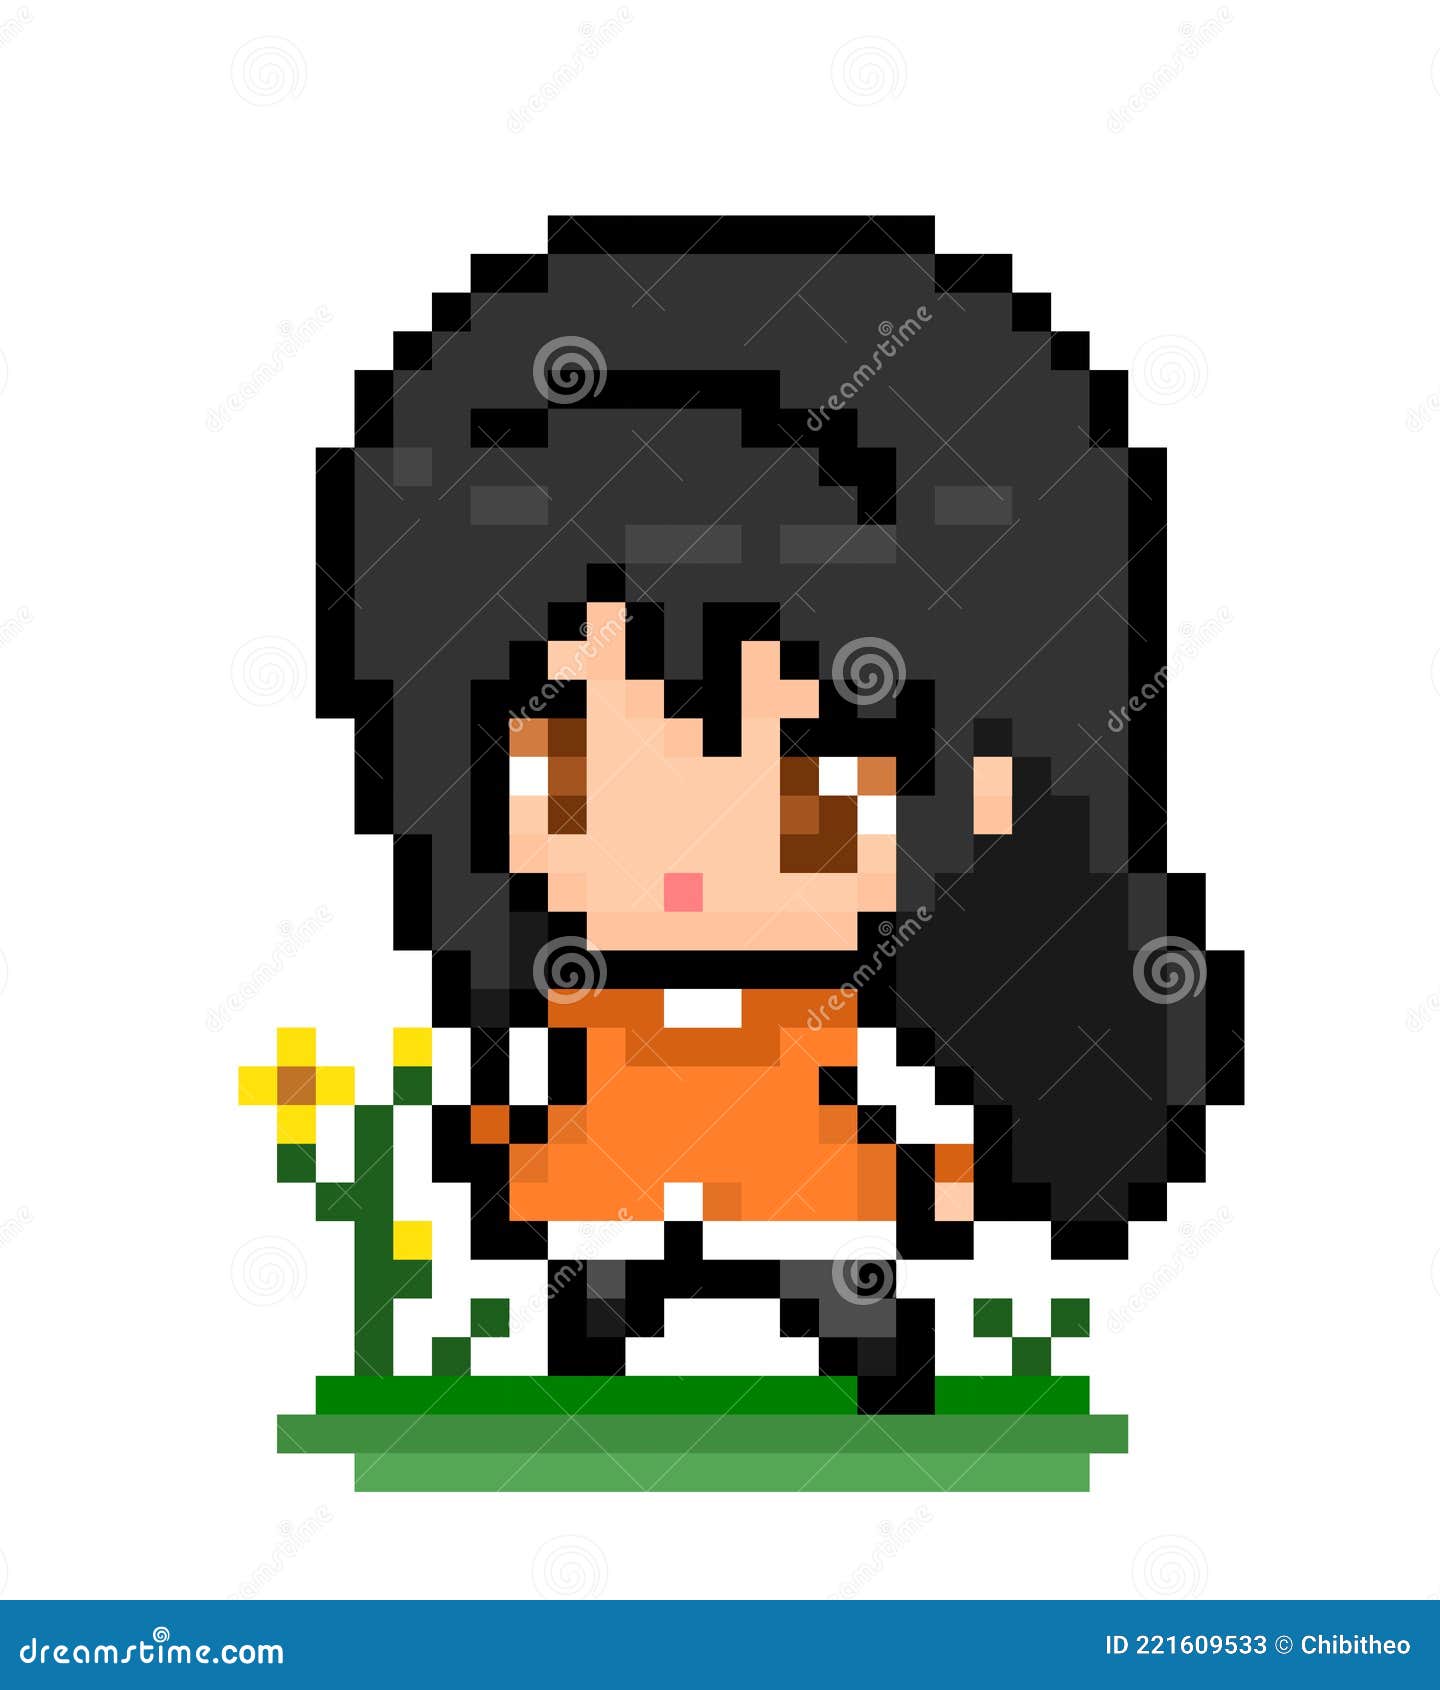 Premium Vector | 8 bit of pixel women's character anime cartoon girl in  vector illustrations for game assets